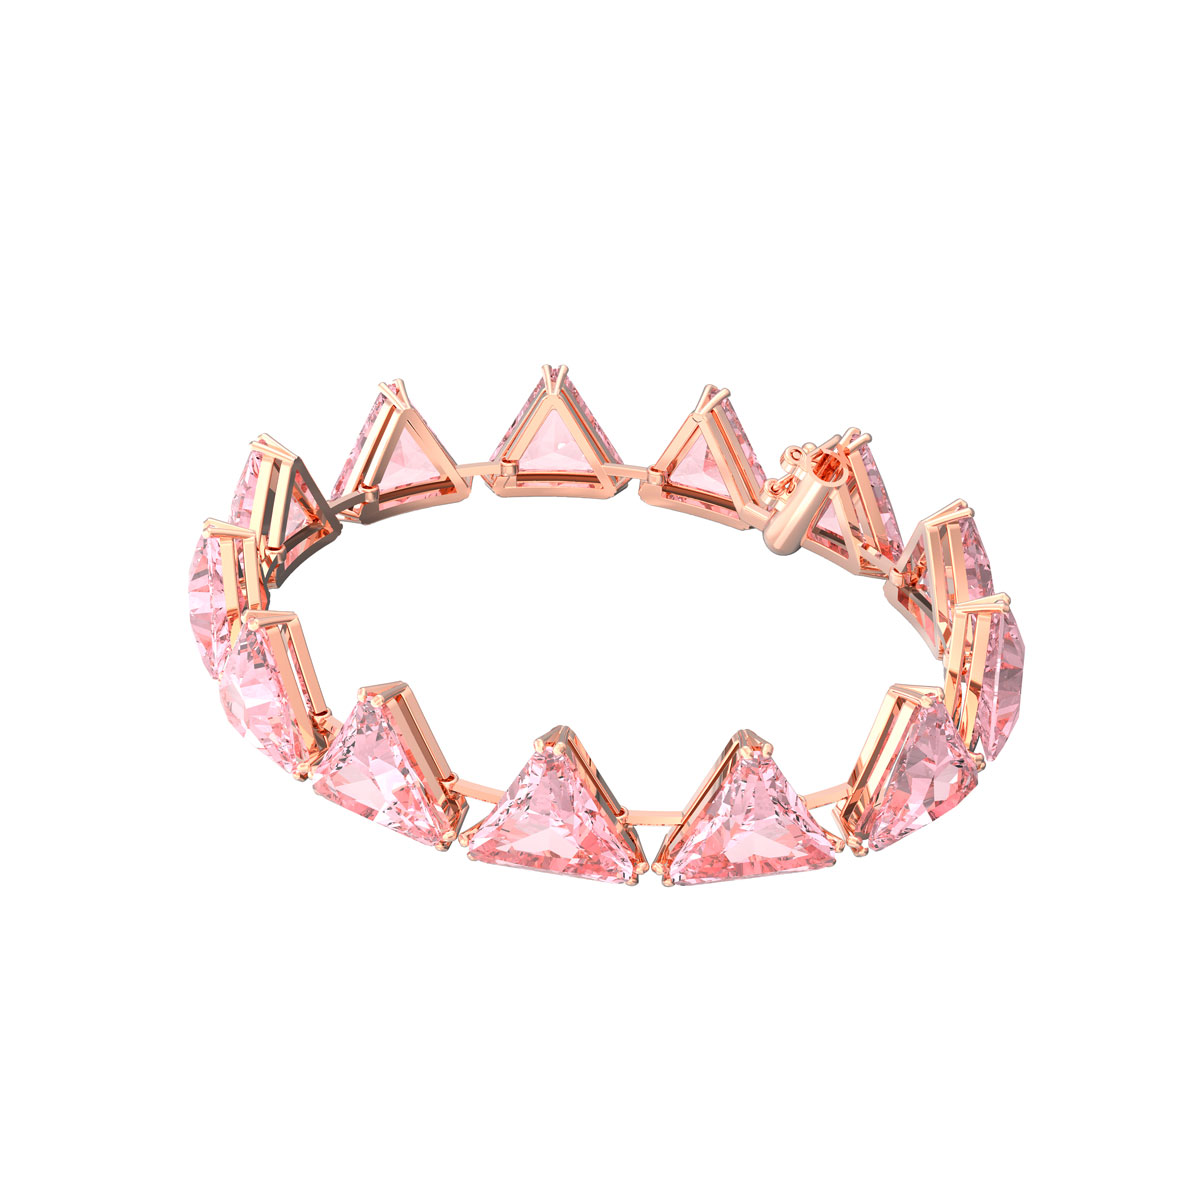 Swarovski Millenia Bracelet, Triangle Cut Crystals, Rose-Gold Tone Plated